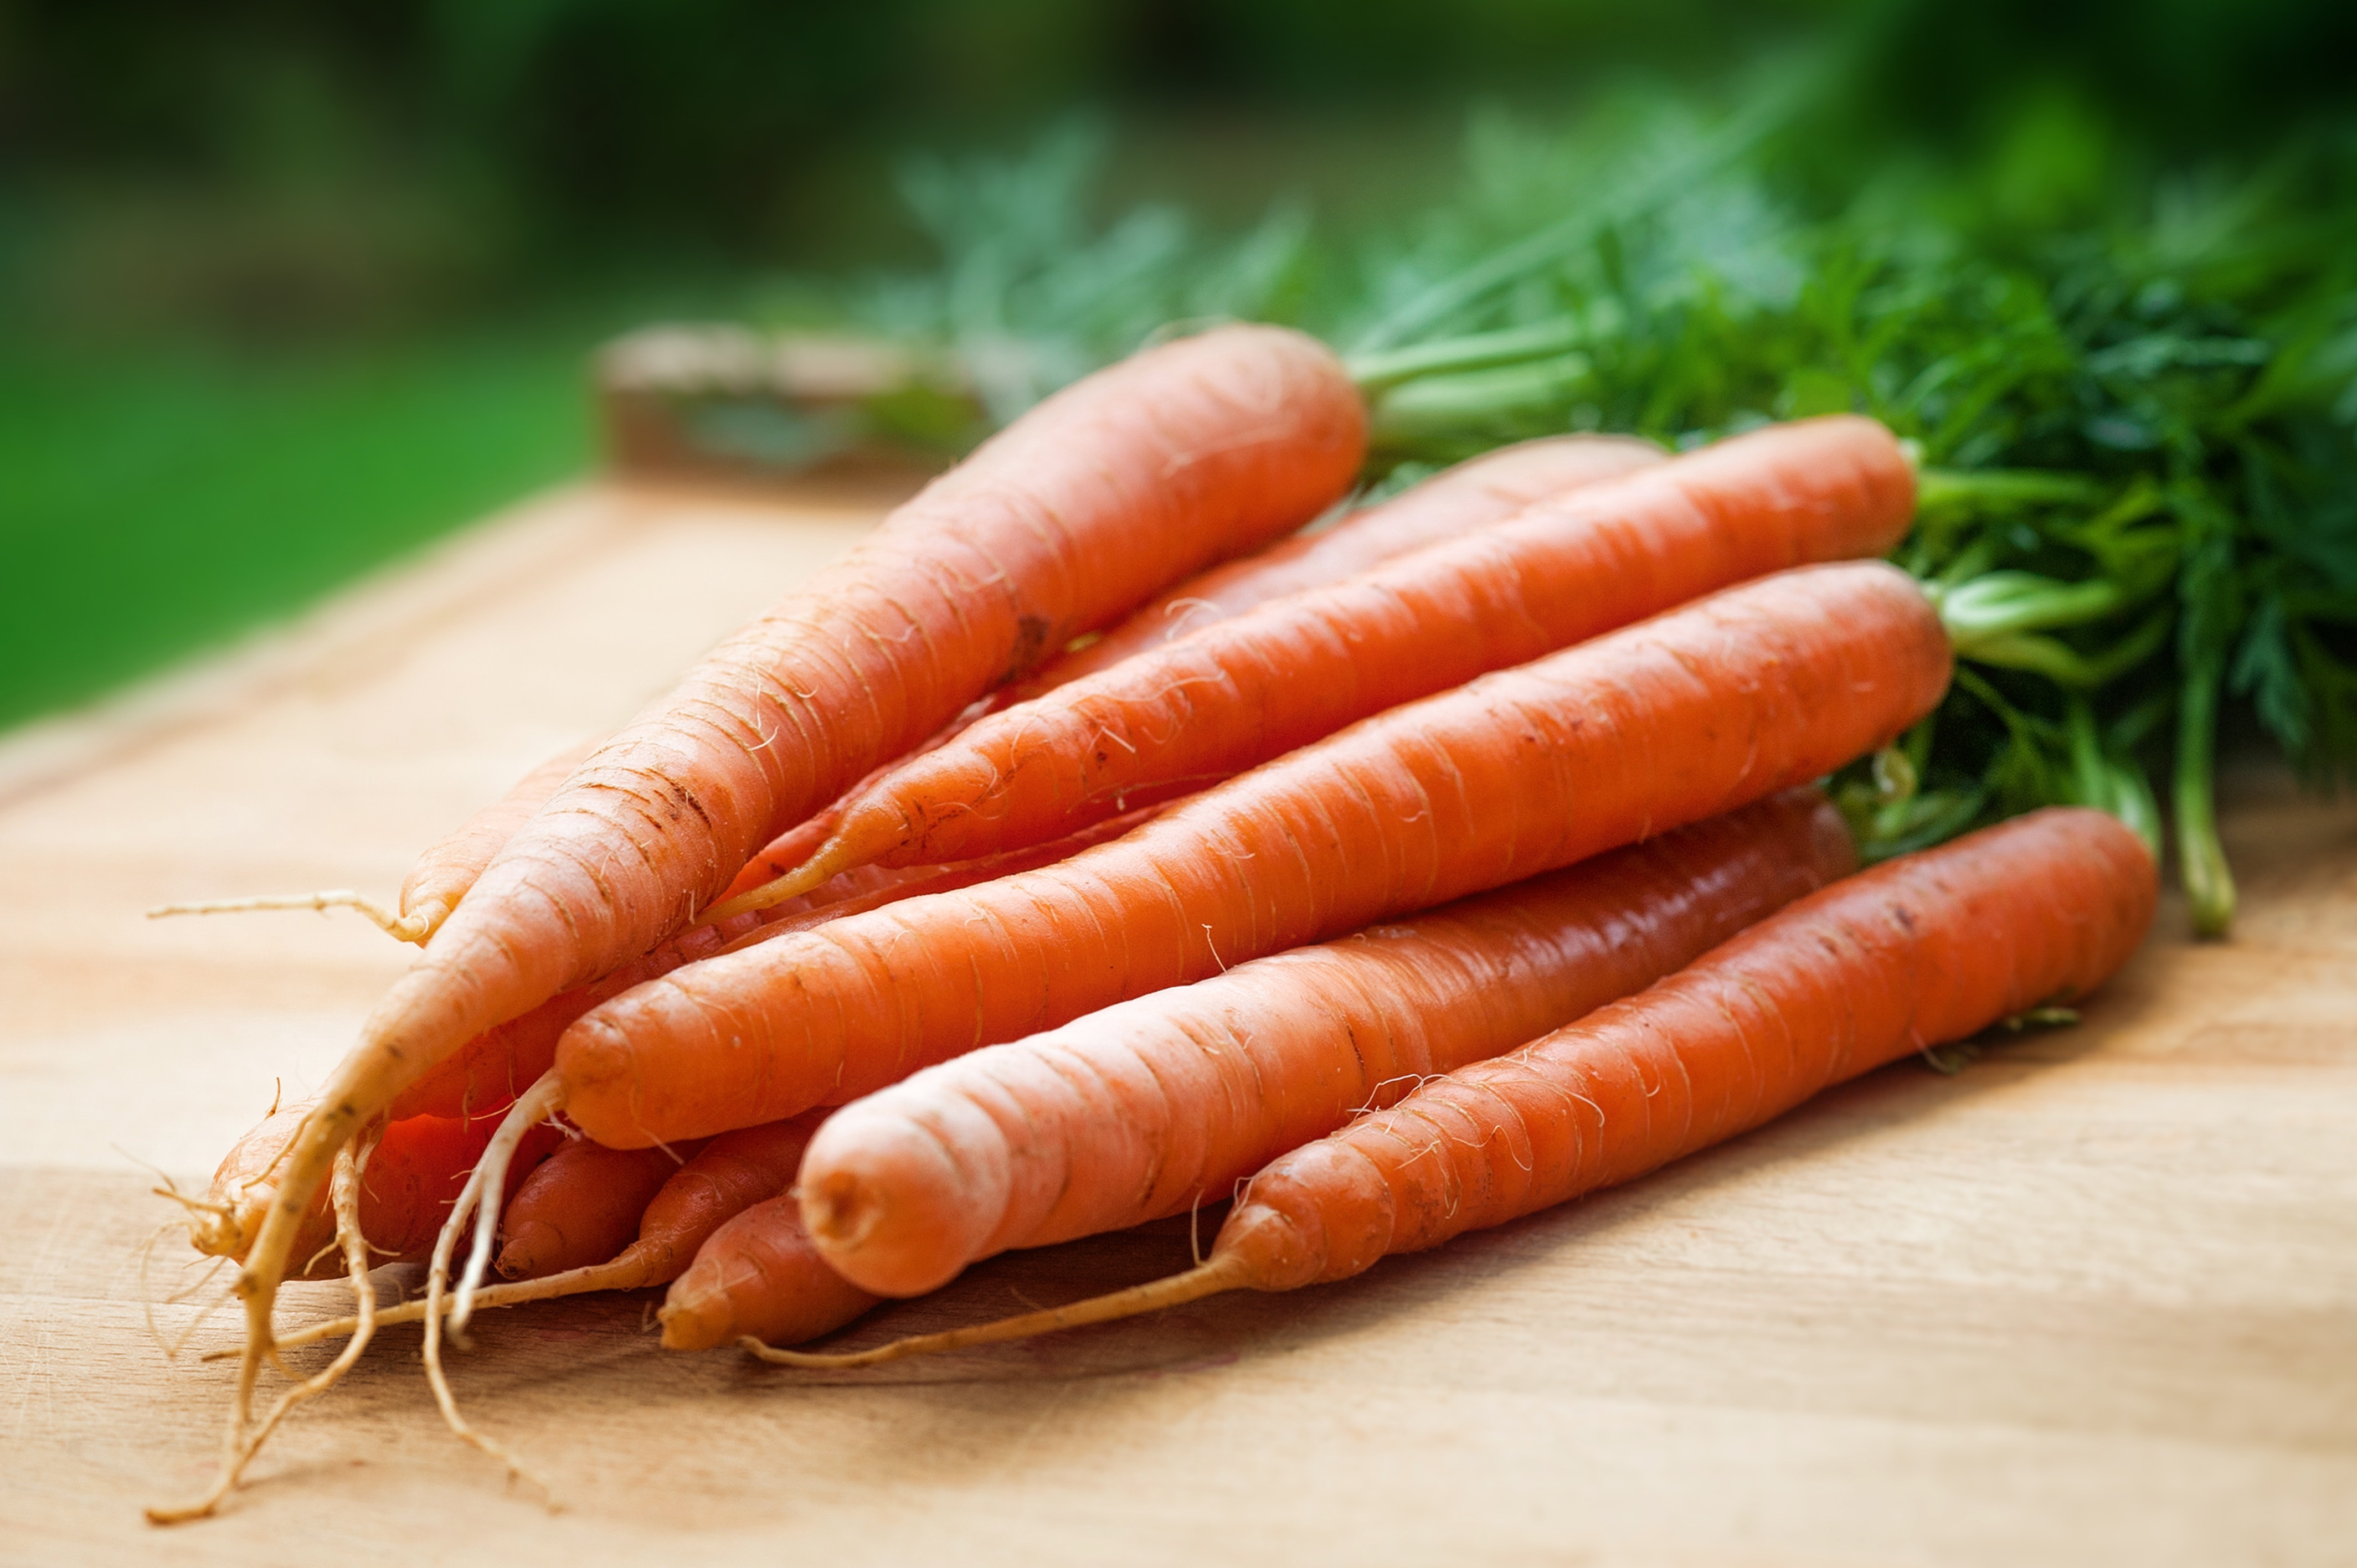 Orange Carrots on Table, Agriculture, Leaf, Vegetarian, Vegetable, HQ Photo